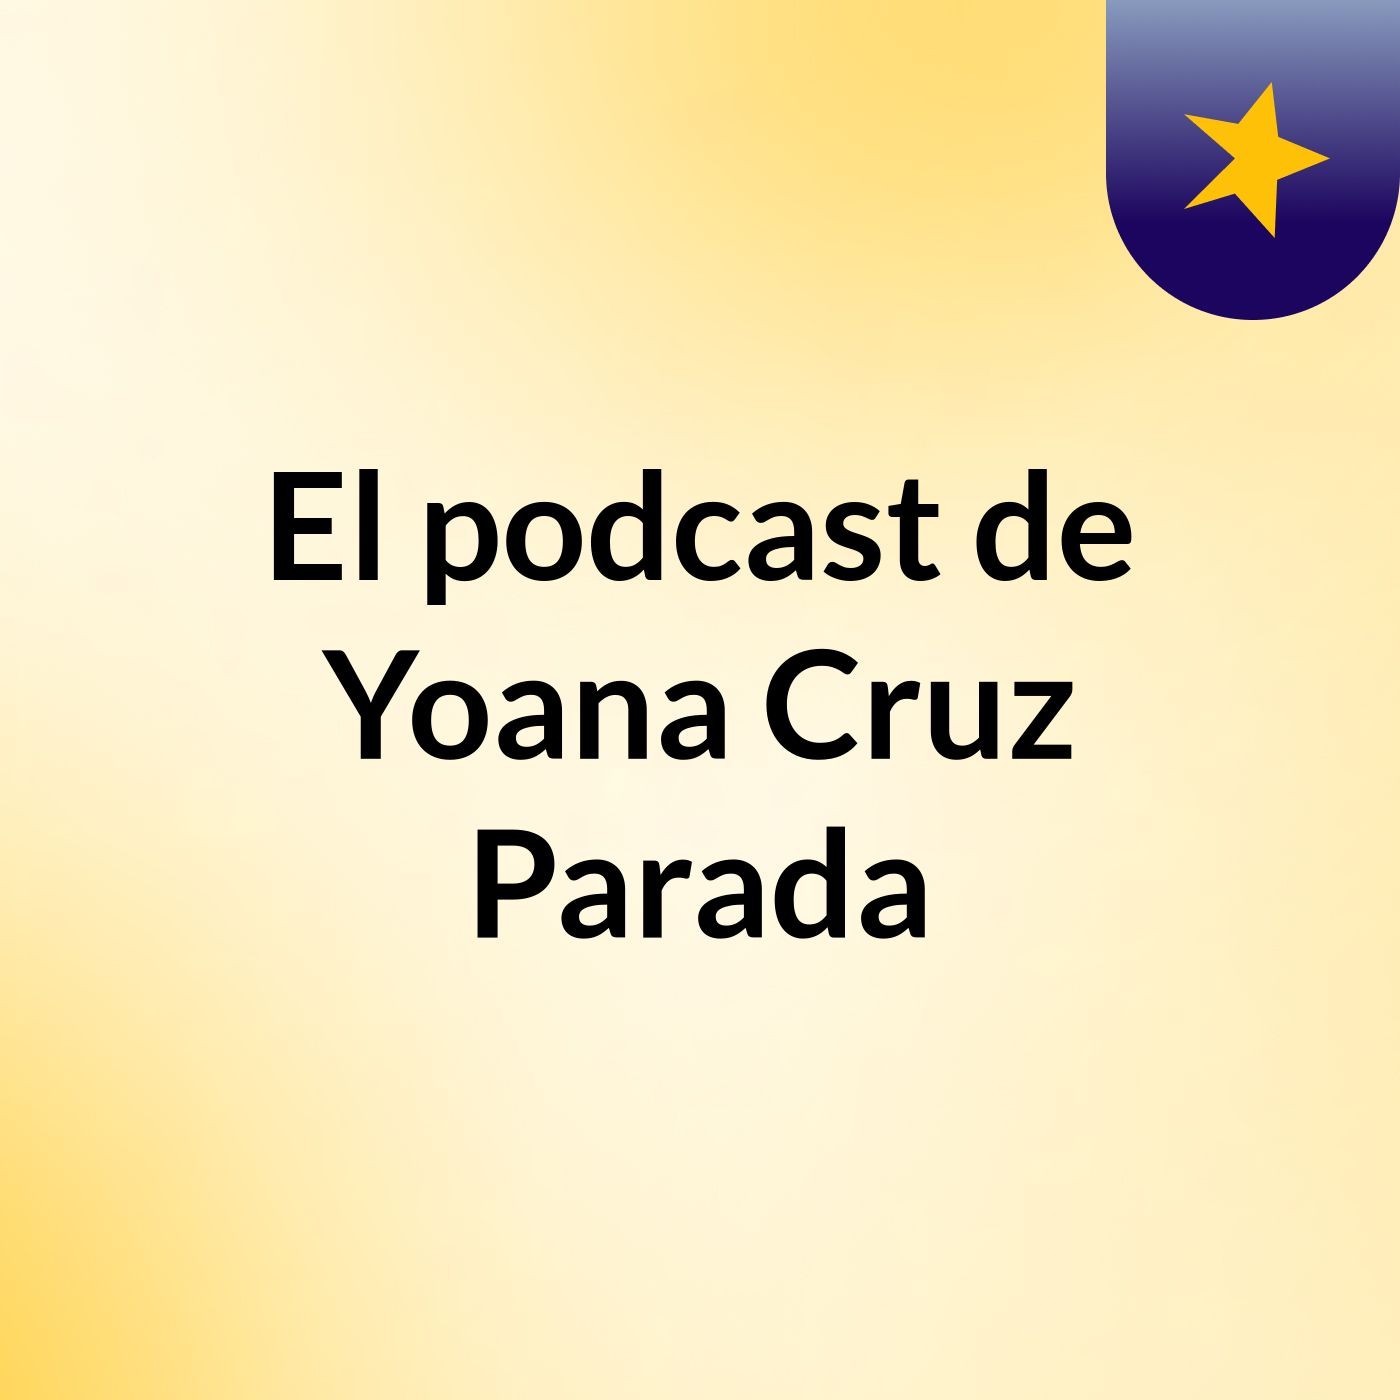 El podcast de Yoana Cruz Parada